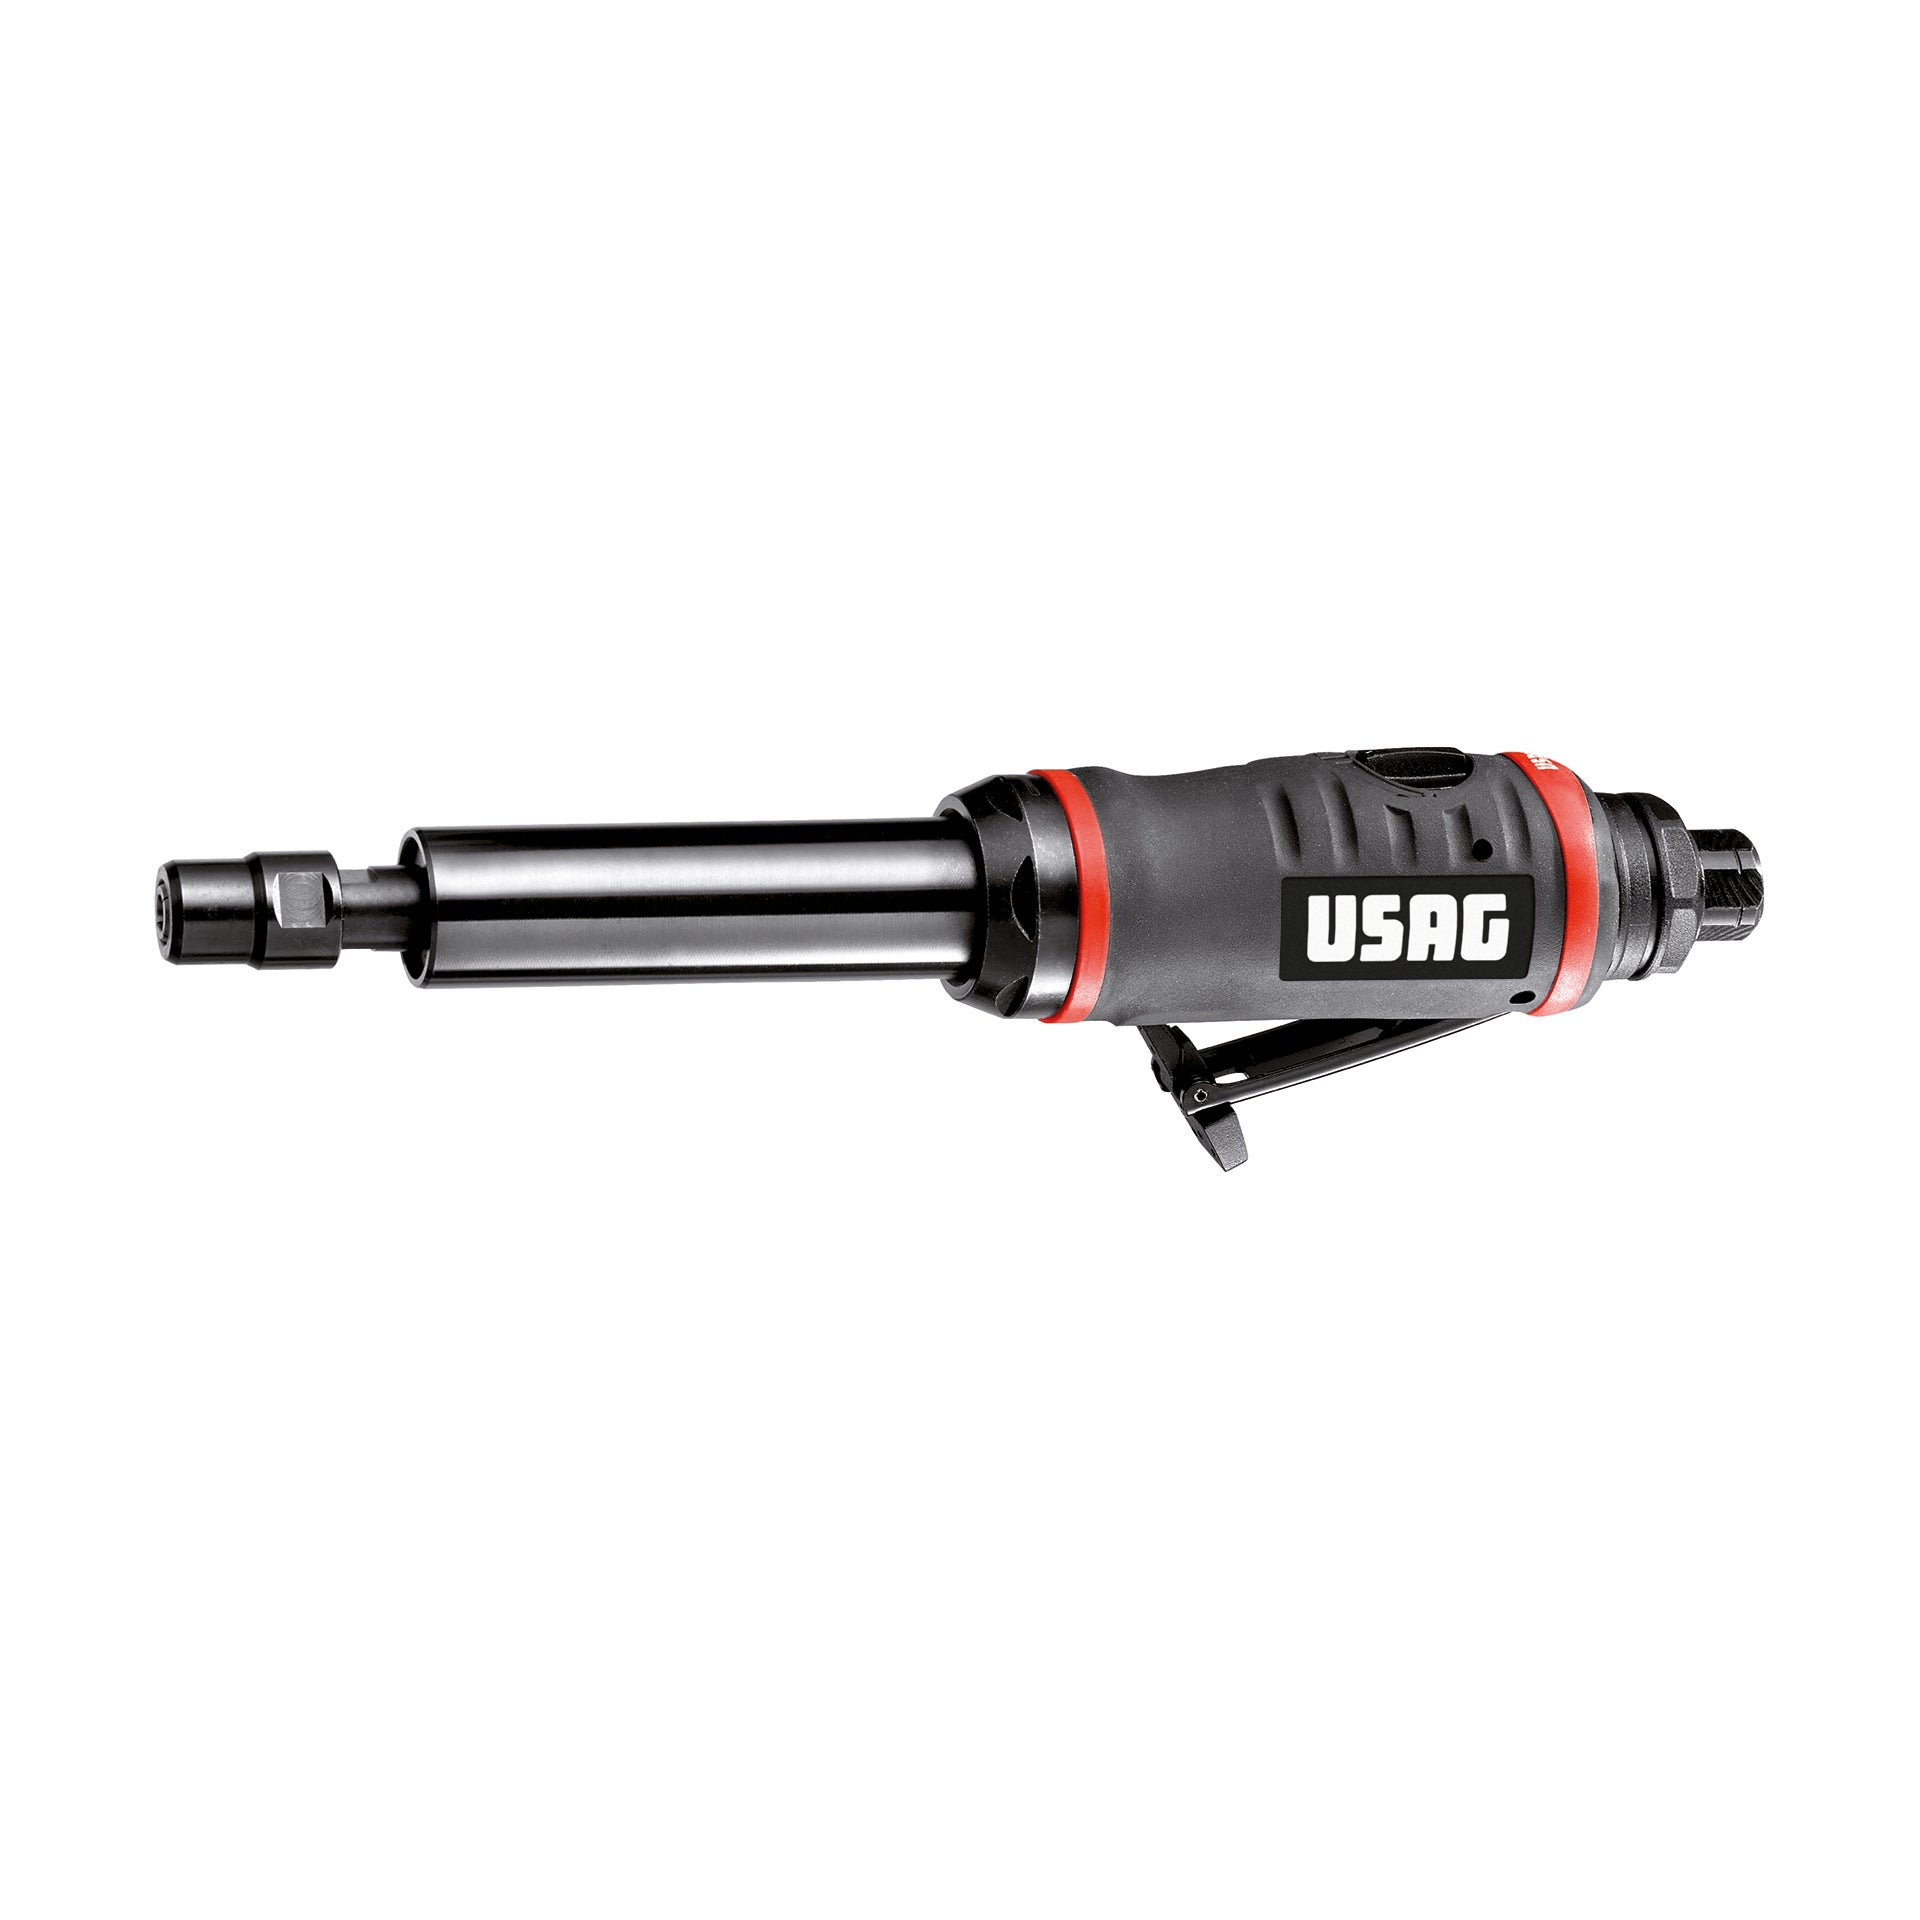 Long anvil straight grinder - 0.3 CV (220 W) 255x39x70mm 664gr Usag 922 BL1